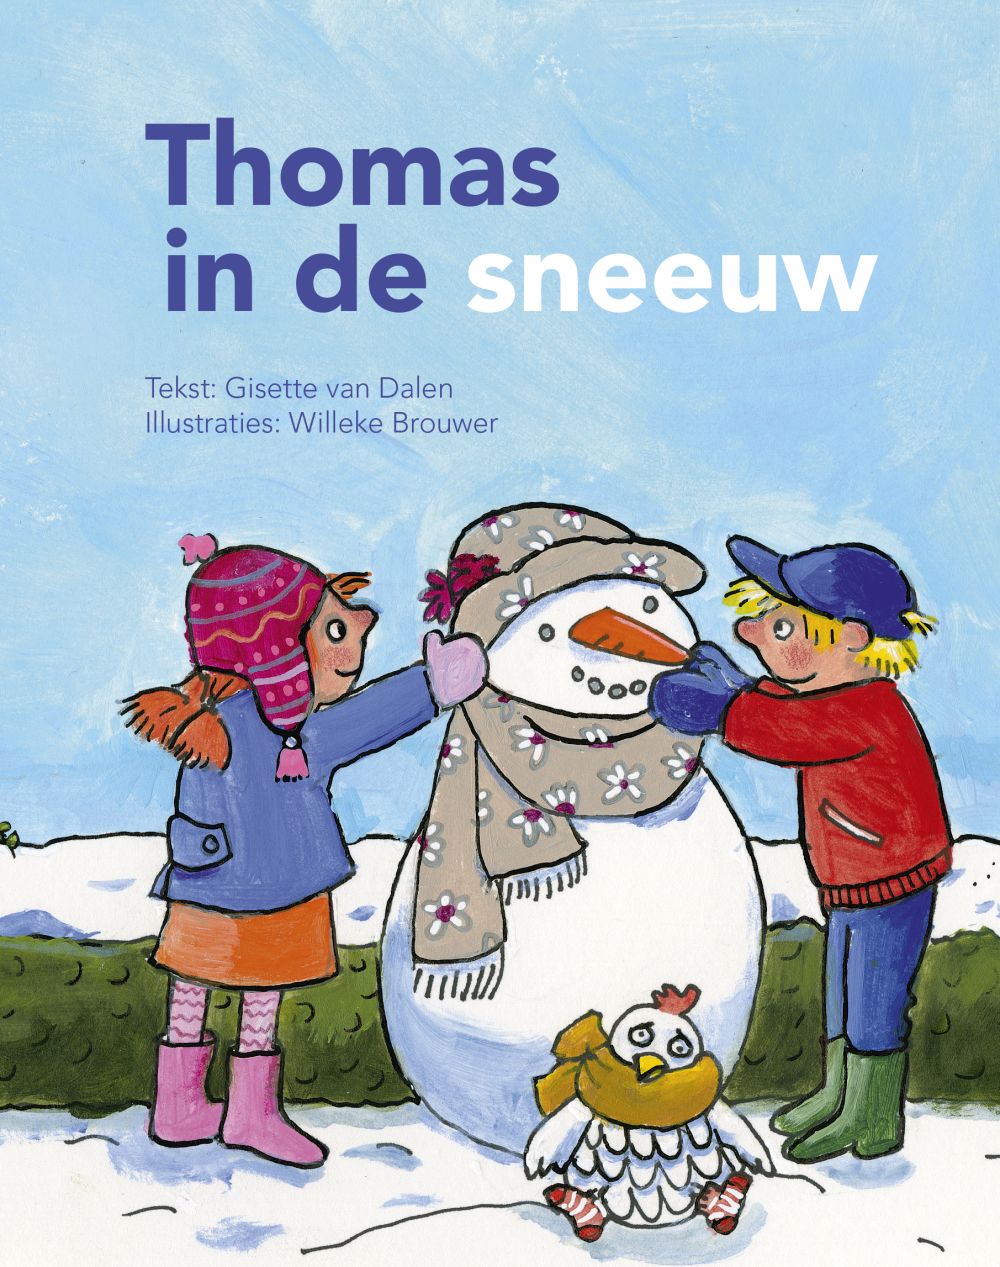 Thomas in de sneeuw